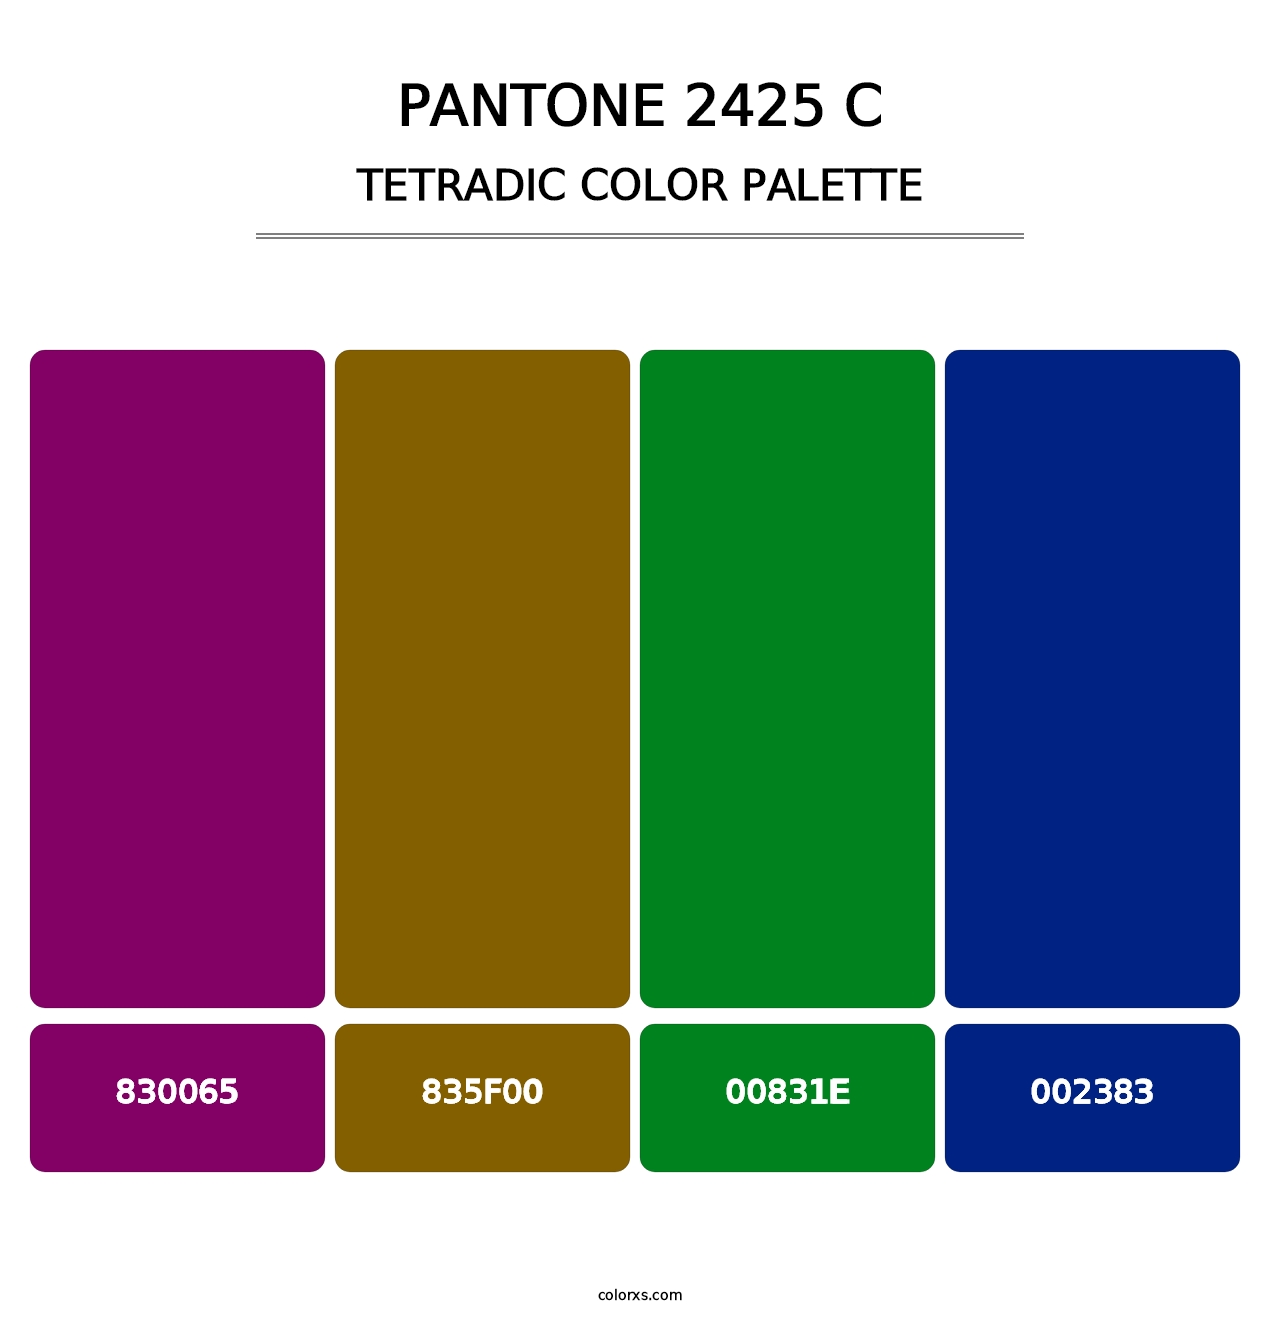 PANTONE 2425 C - Tetradic Color Palette